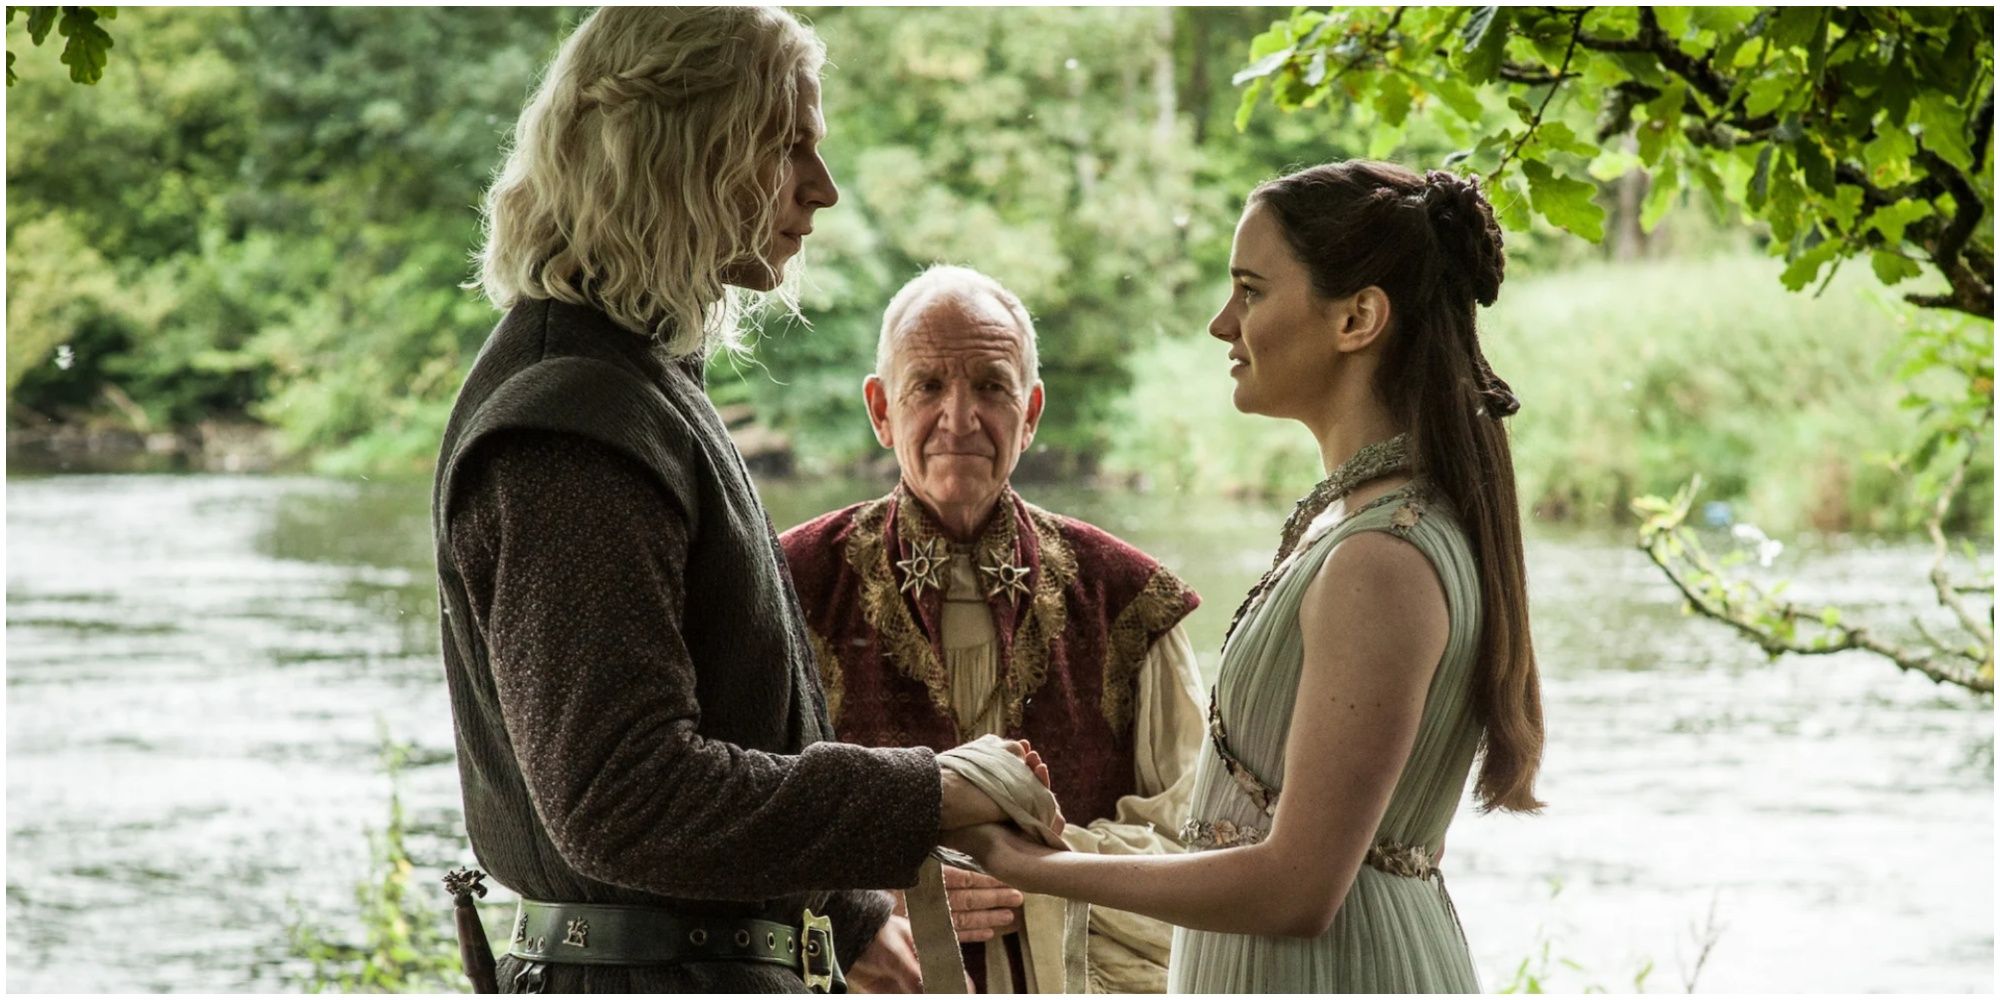 Rhaegar Targaryen And Lyanna Stark's secret wedding ceremony performed by High Septon in Game of Thrones.